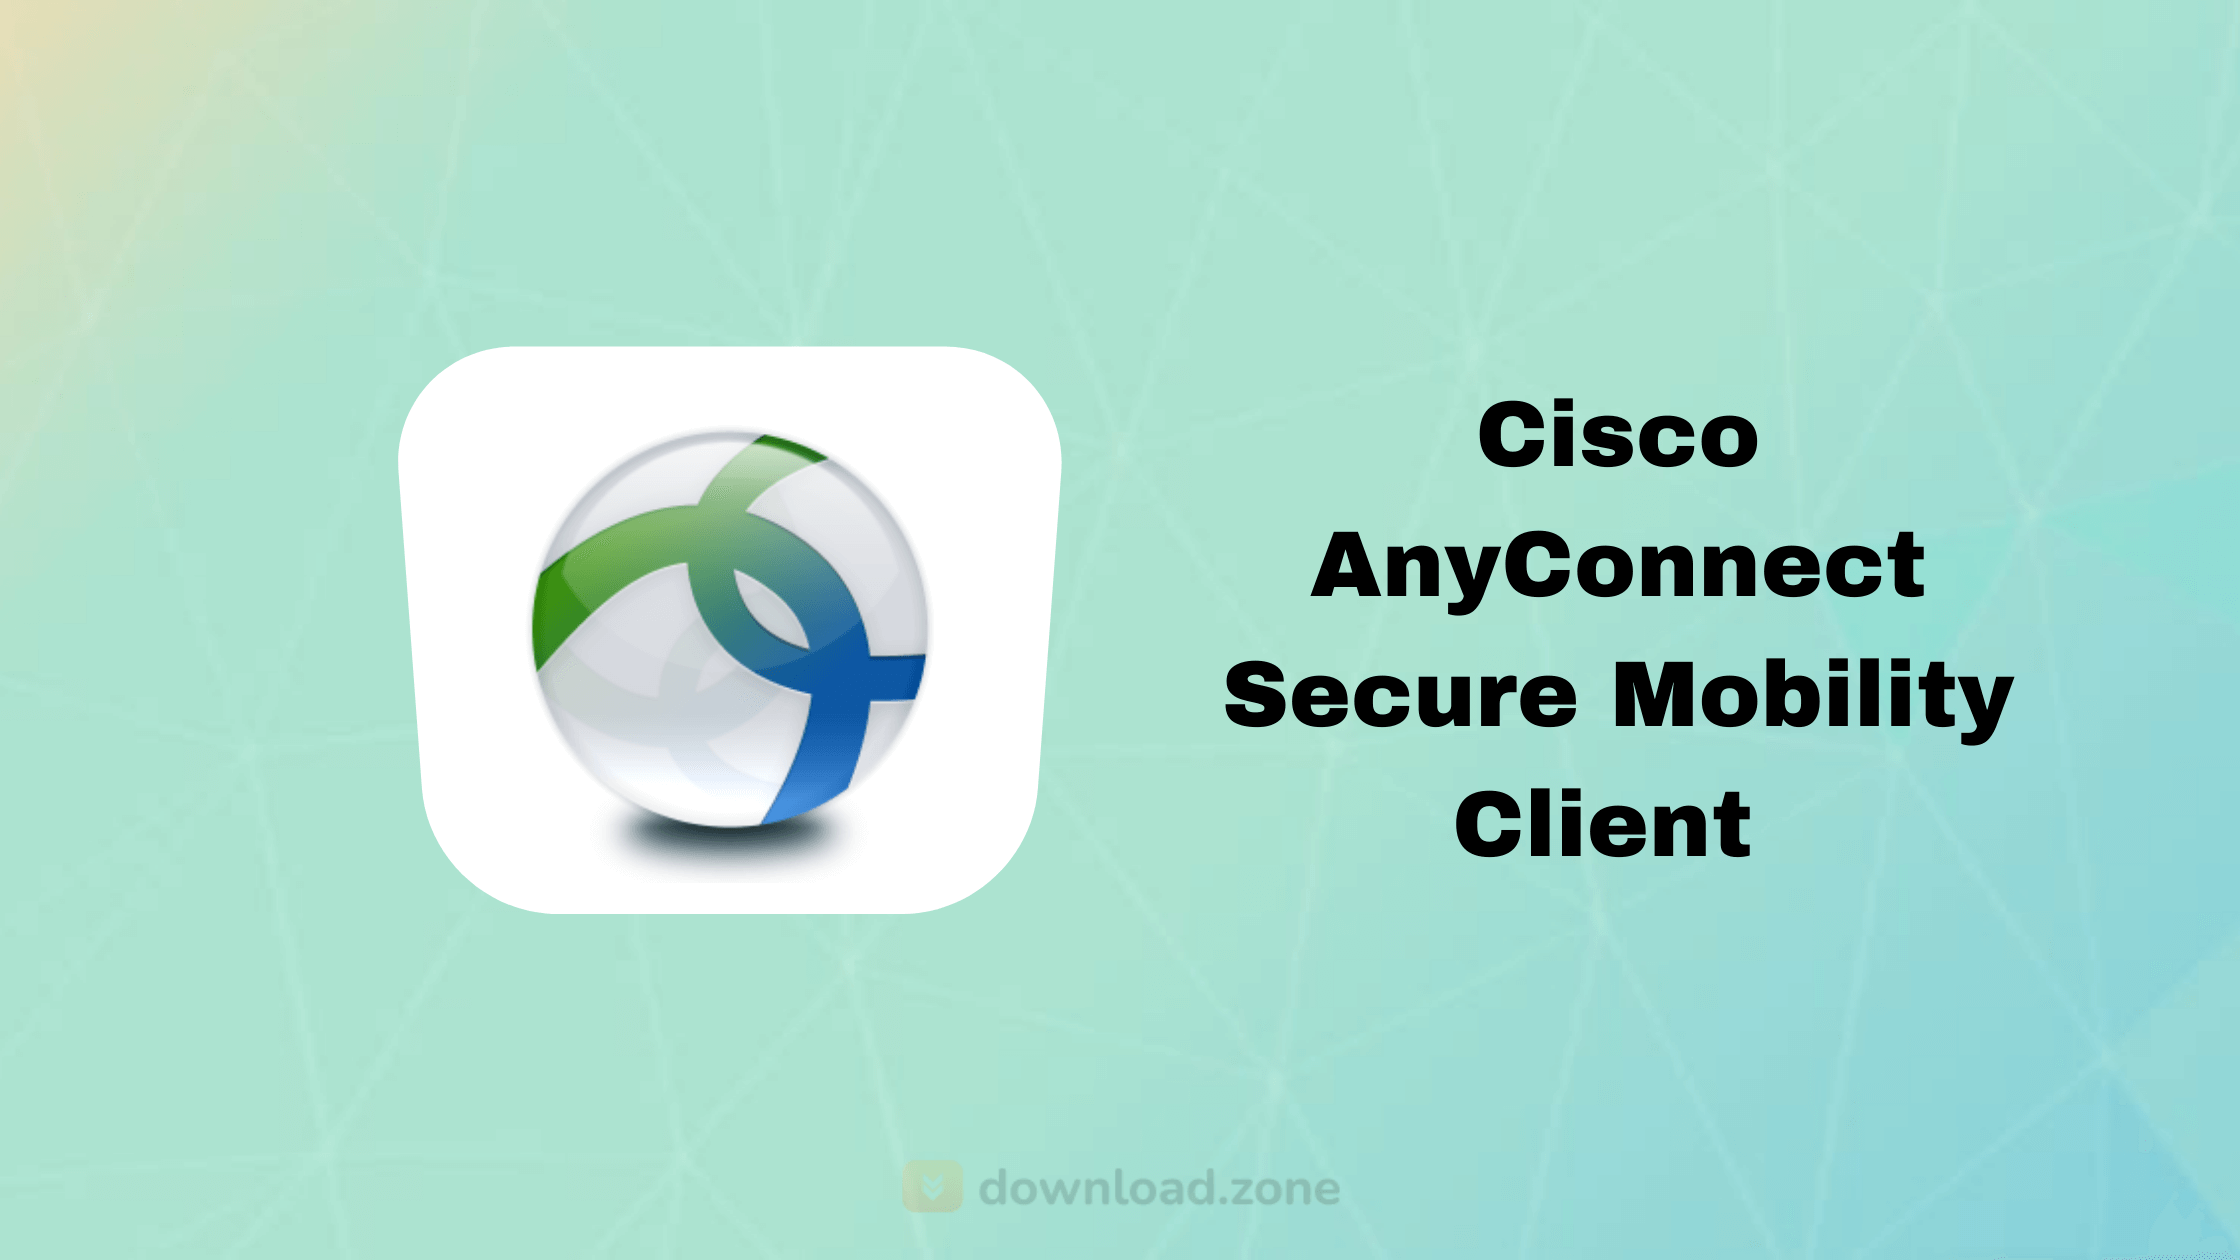 cisco vpn windows 8.1 download free